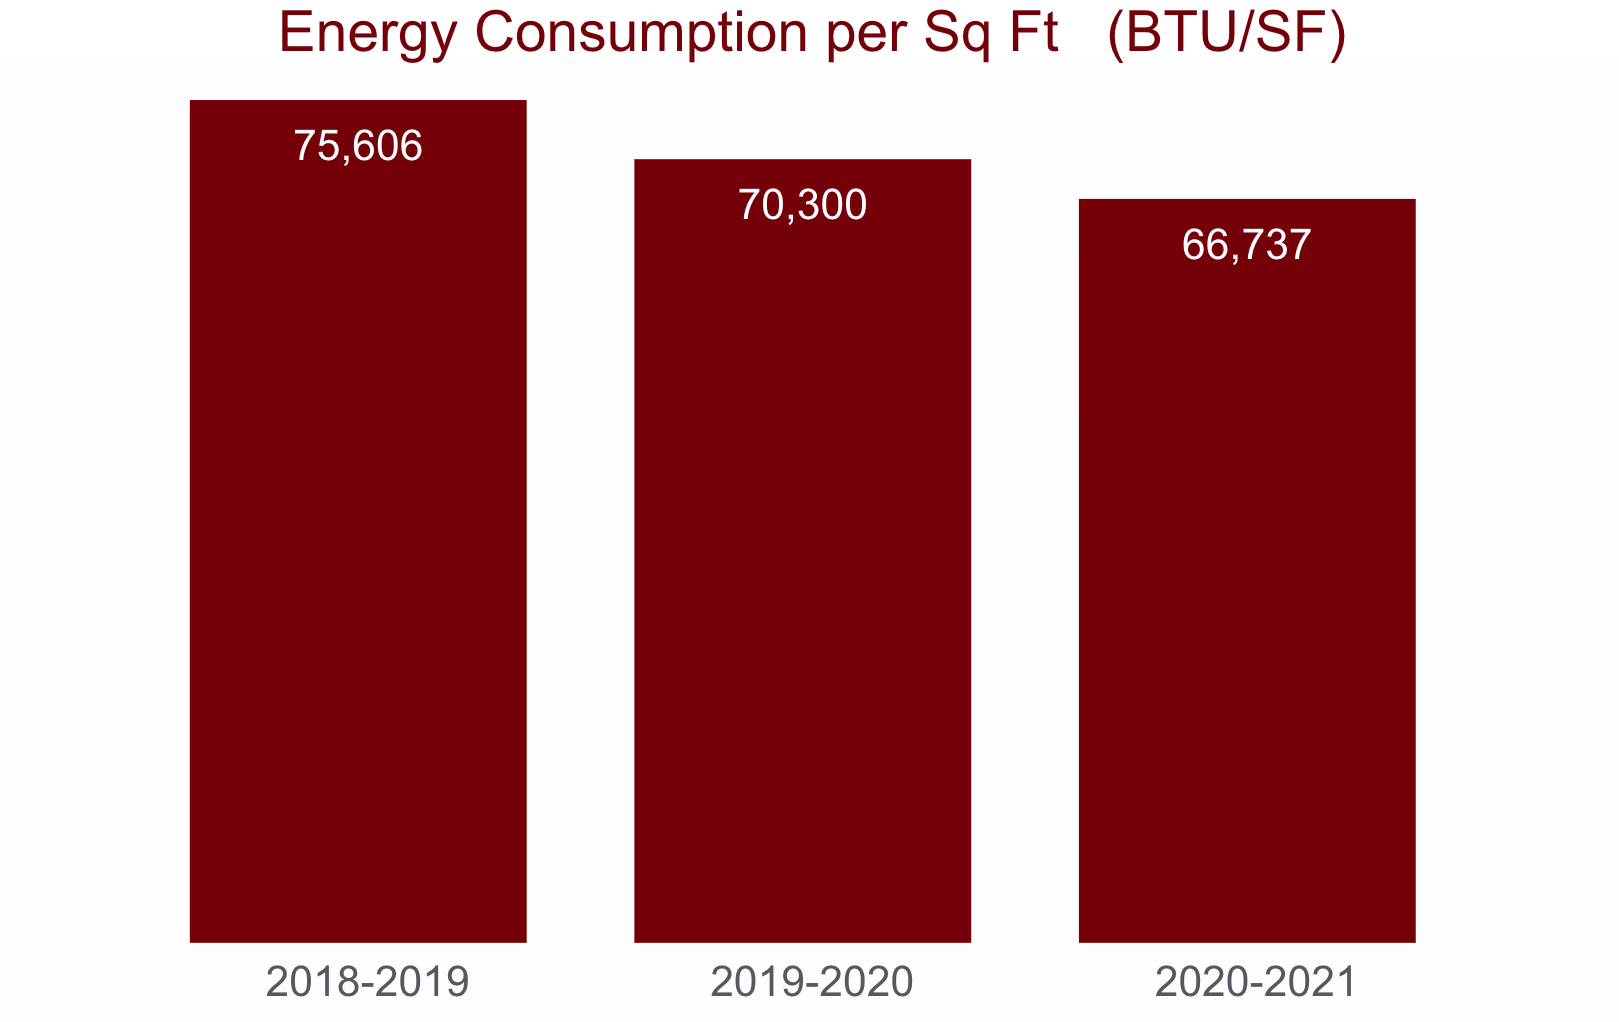 Bar chart showing energy consumption per square foot (B.T.U./S.F.)